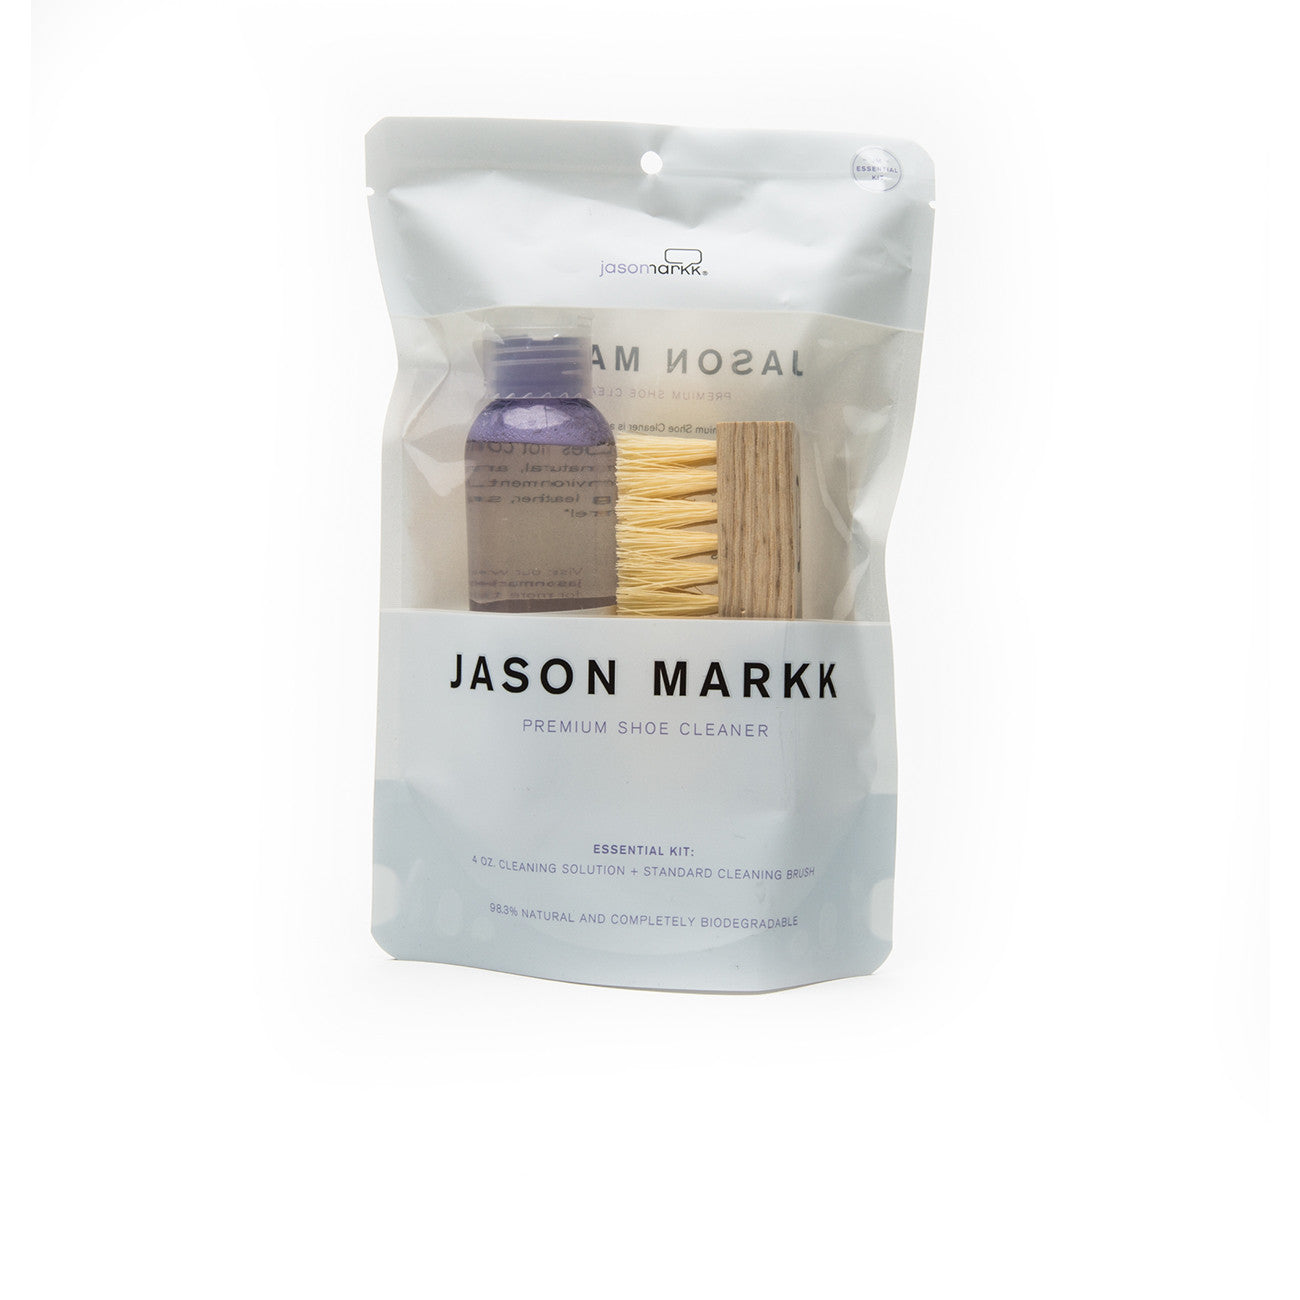 Jason Markk Premium Shoe Cleaner Kit